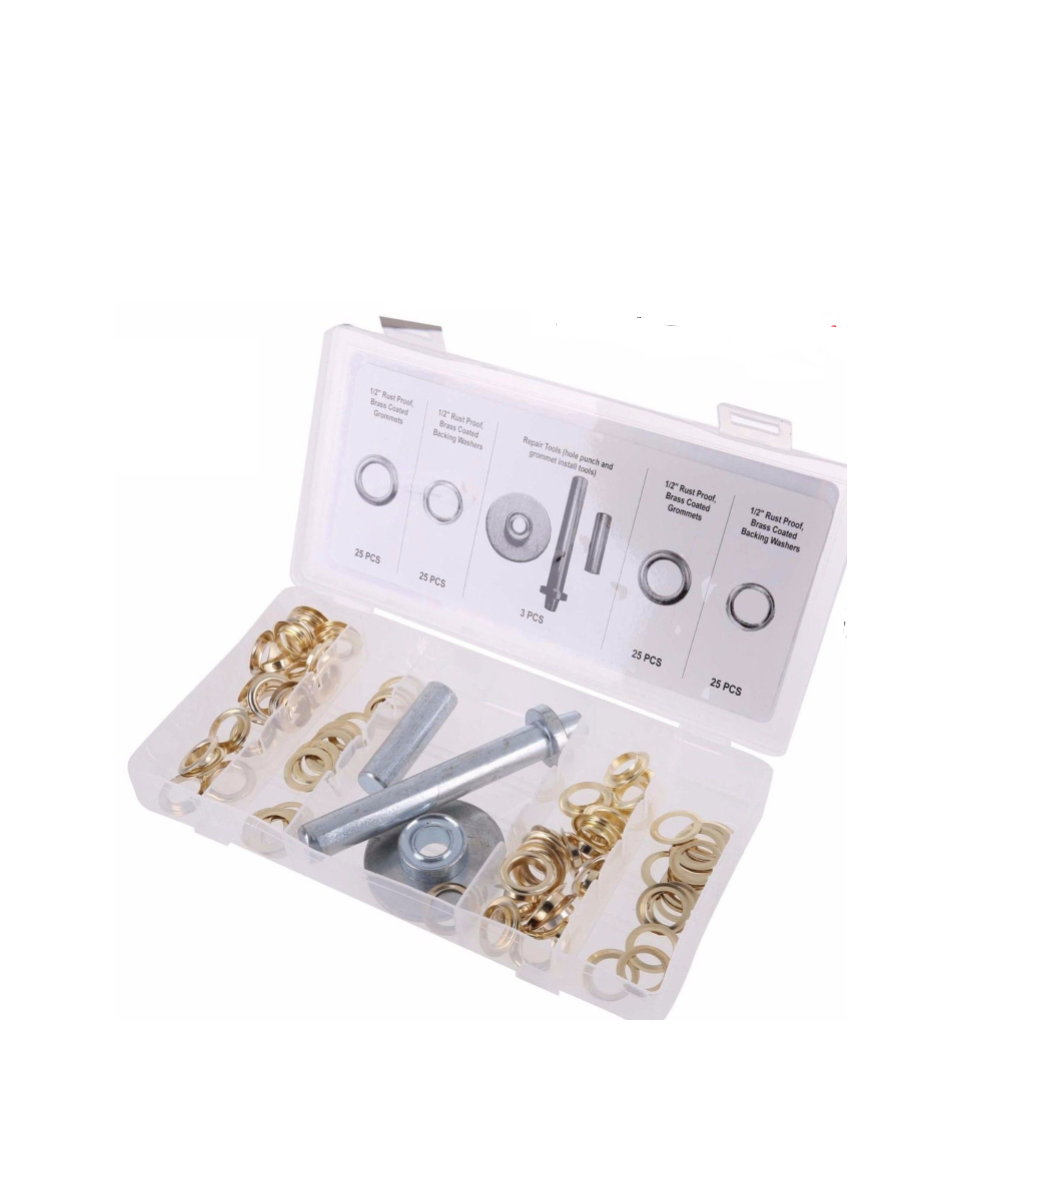 103 Pc. Tarp Repair Grommet Kit With Tools